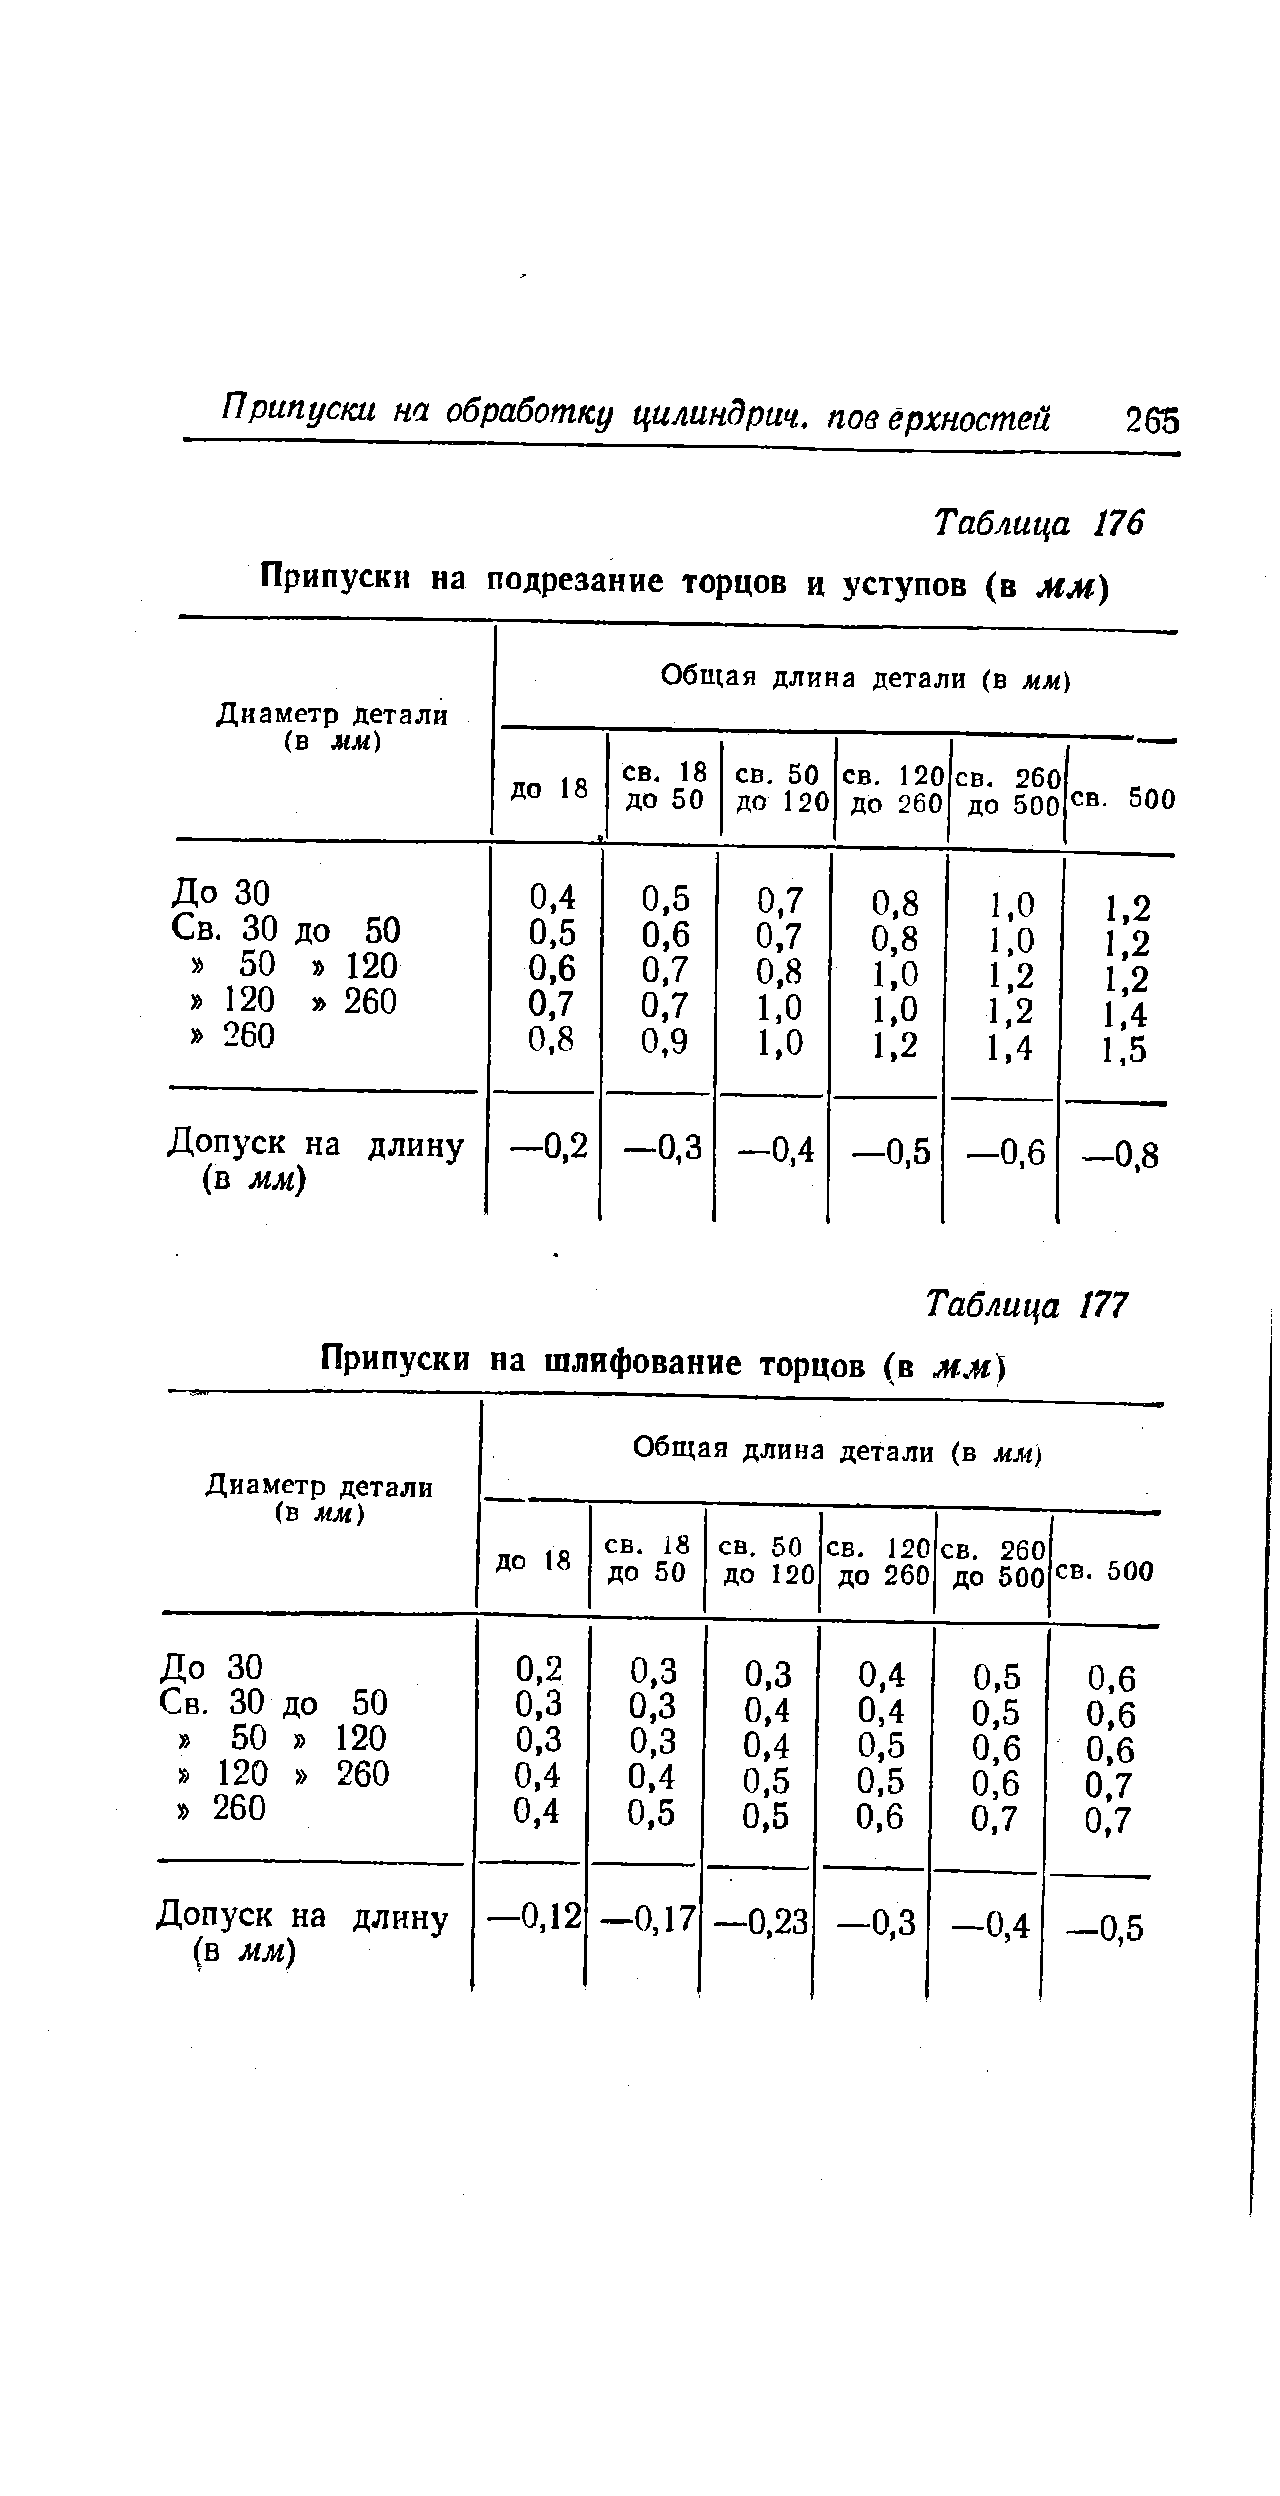 Таблица 177 Припуски на шлифование торцов (в мм)
